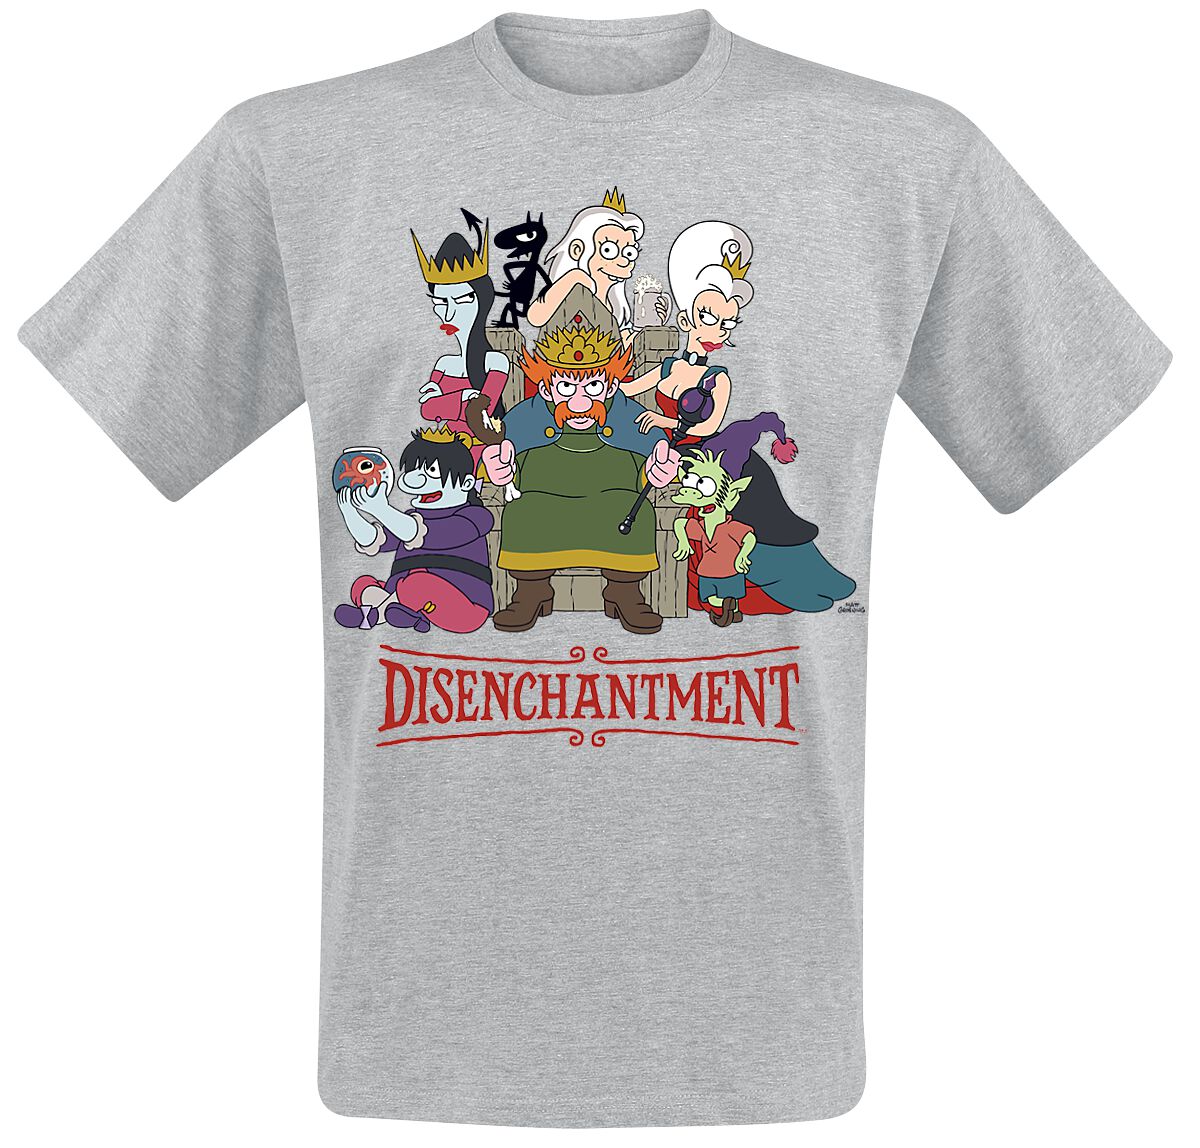 Disenchantment Group T-Shirt mottled grey